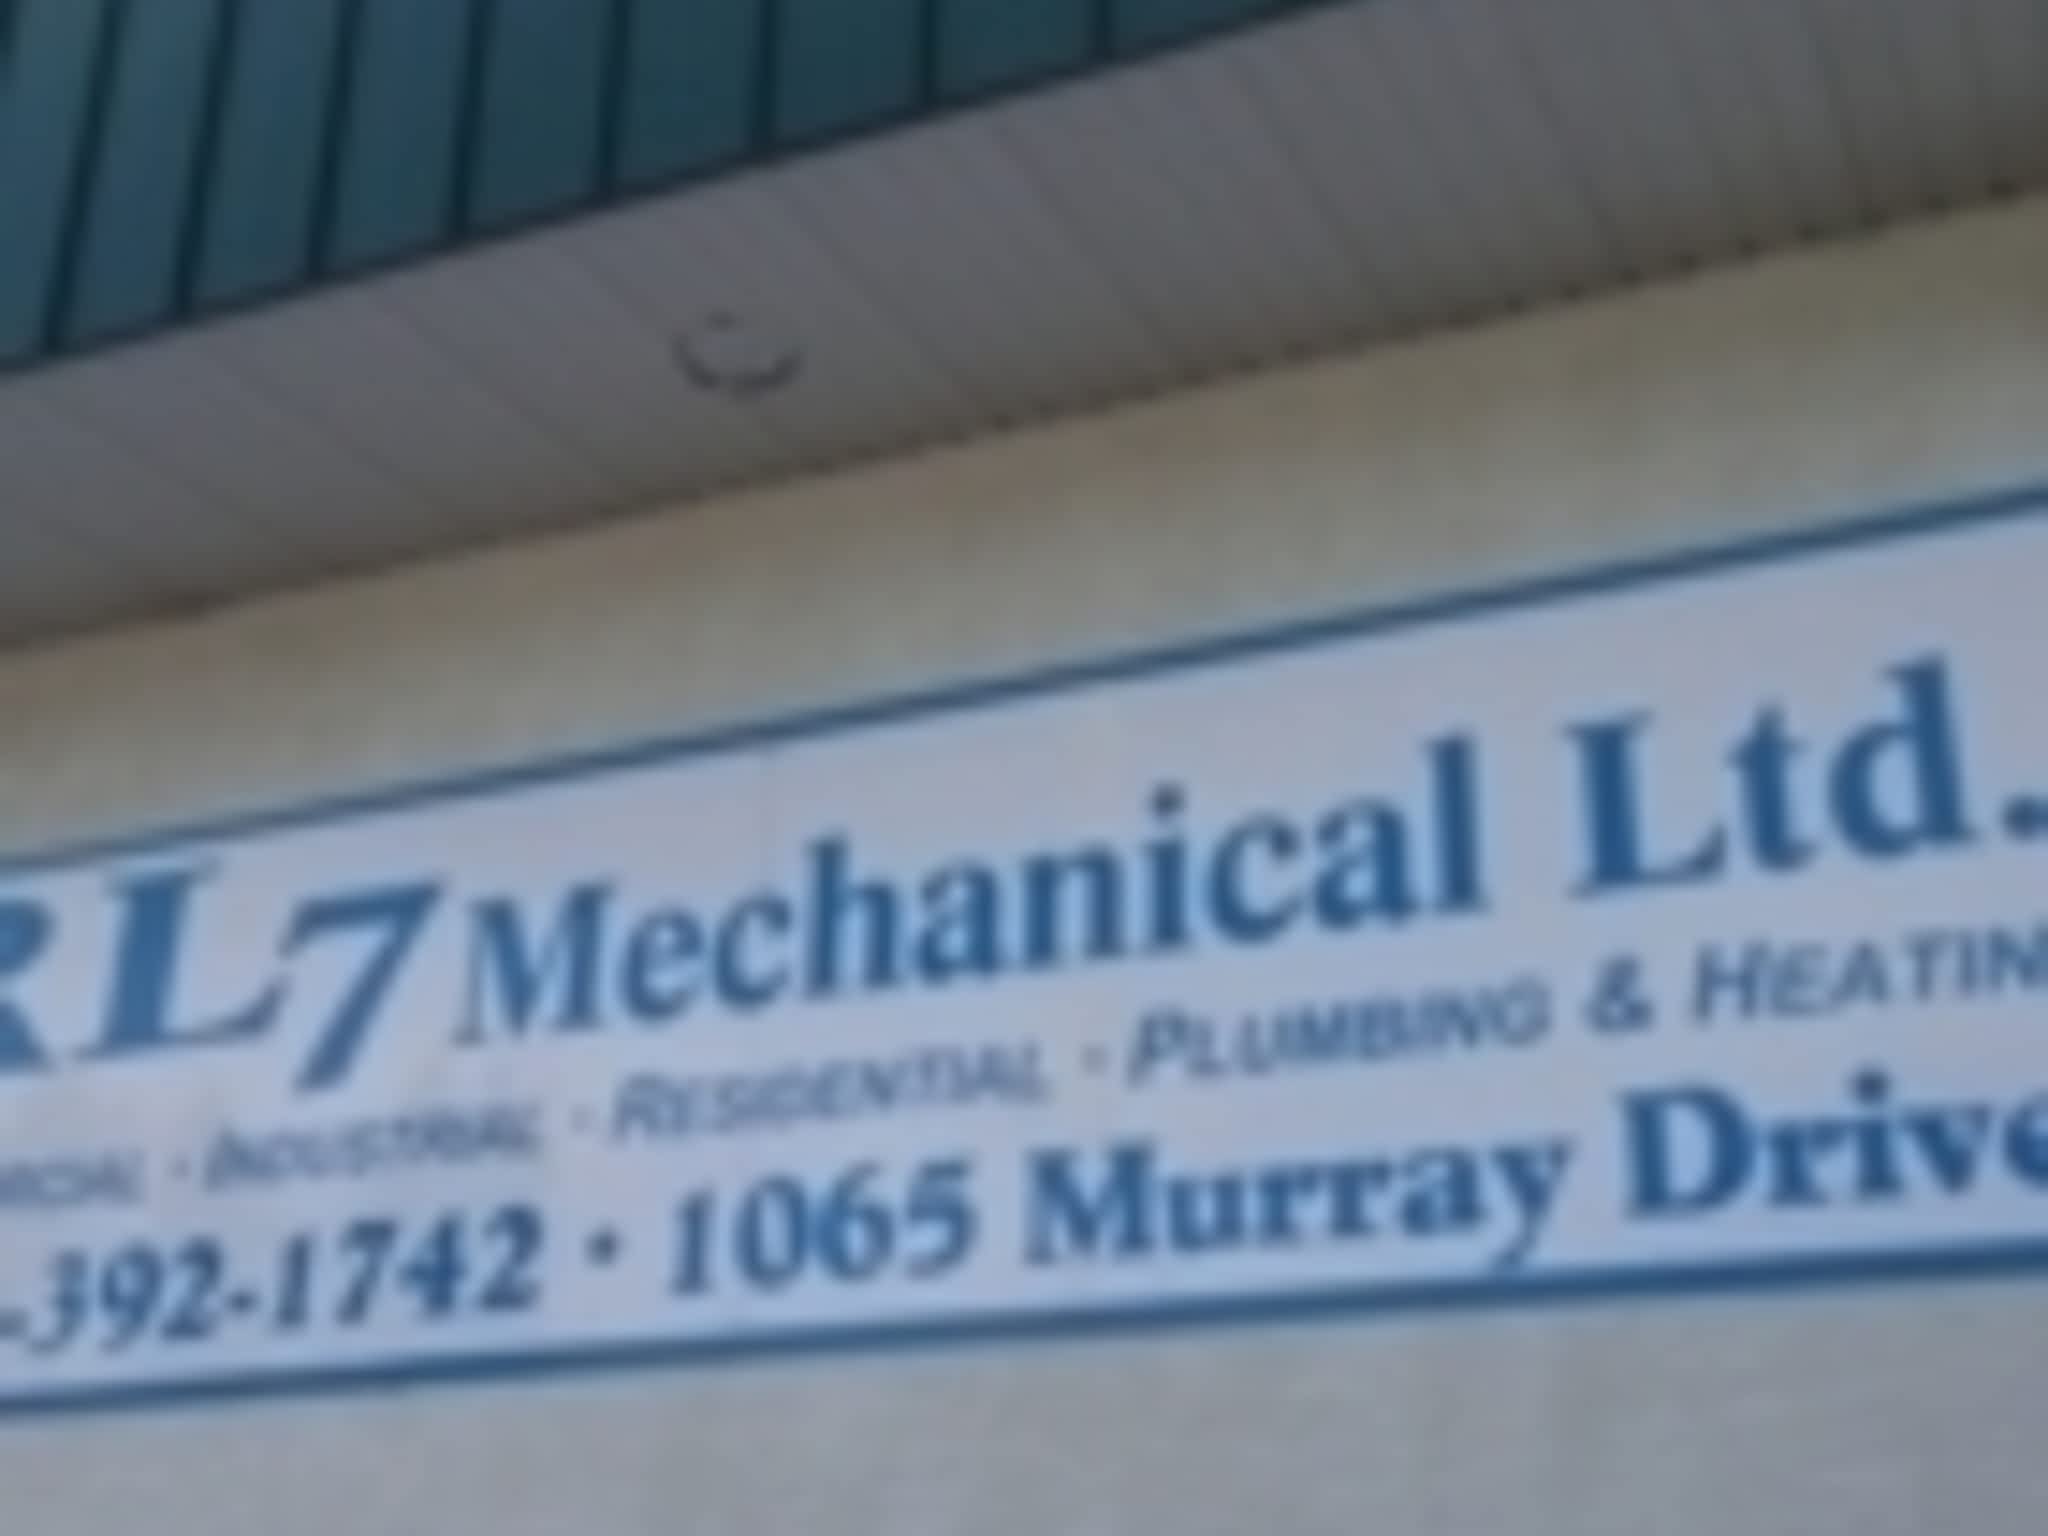 photo RL 7 Mechanical Ltd